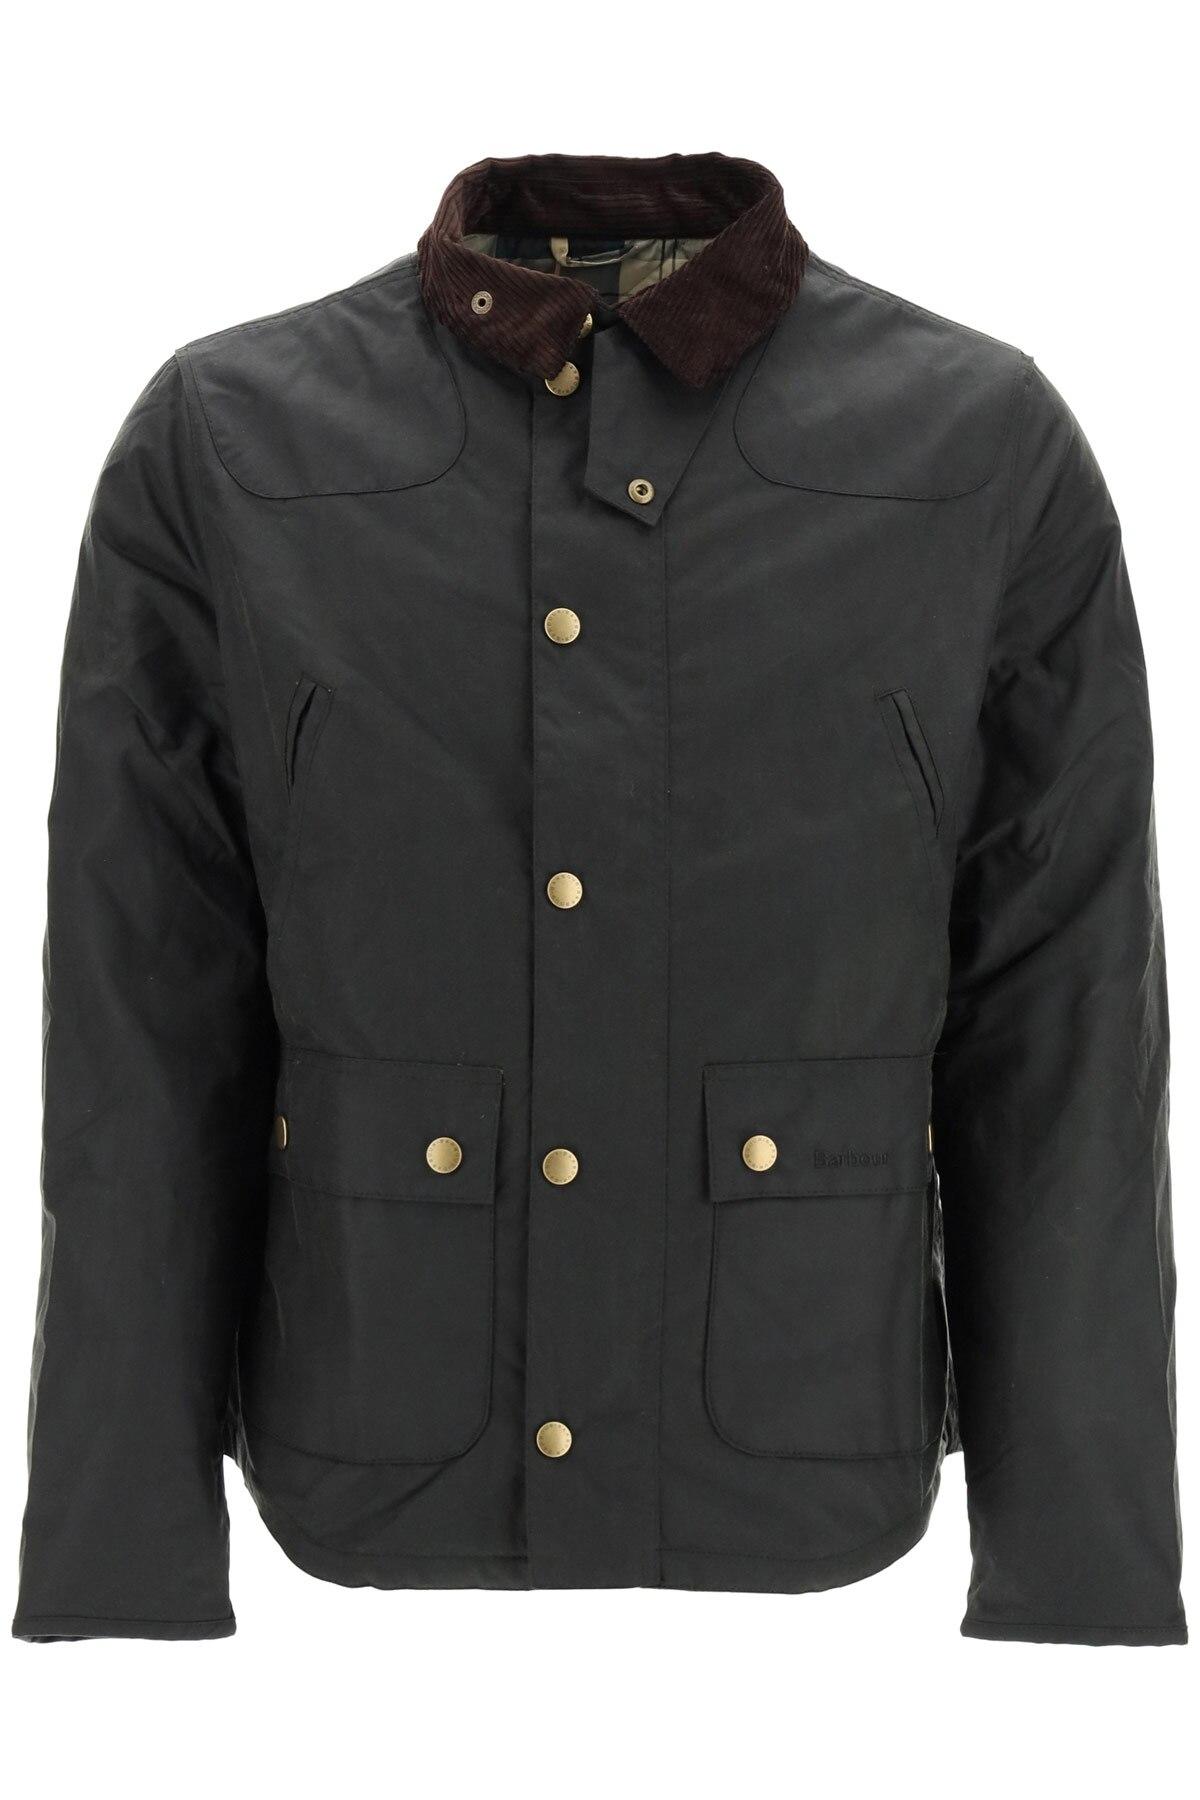 Barbour Cotton Reelin Coated Jacket in Green (Black) for Men - Save 41% |  Lyst